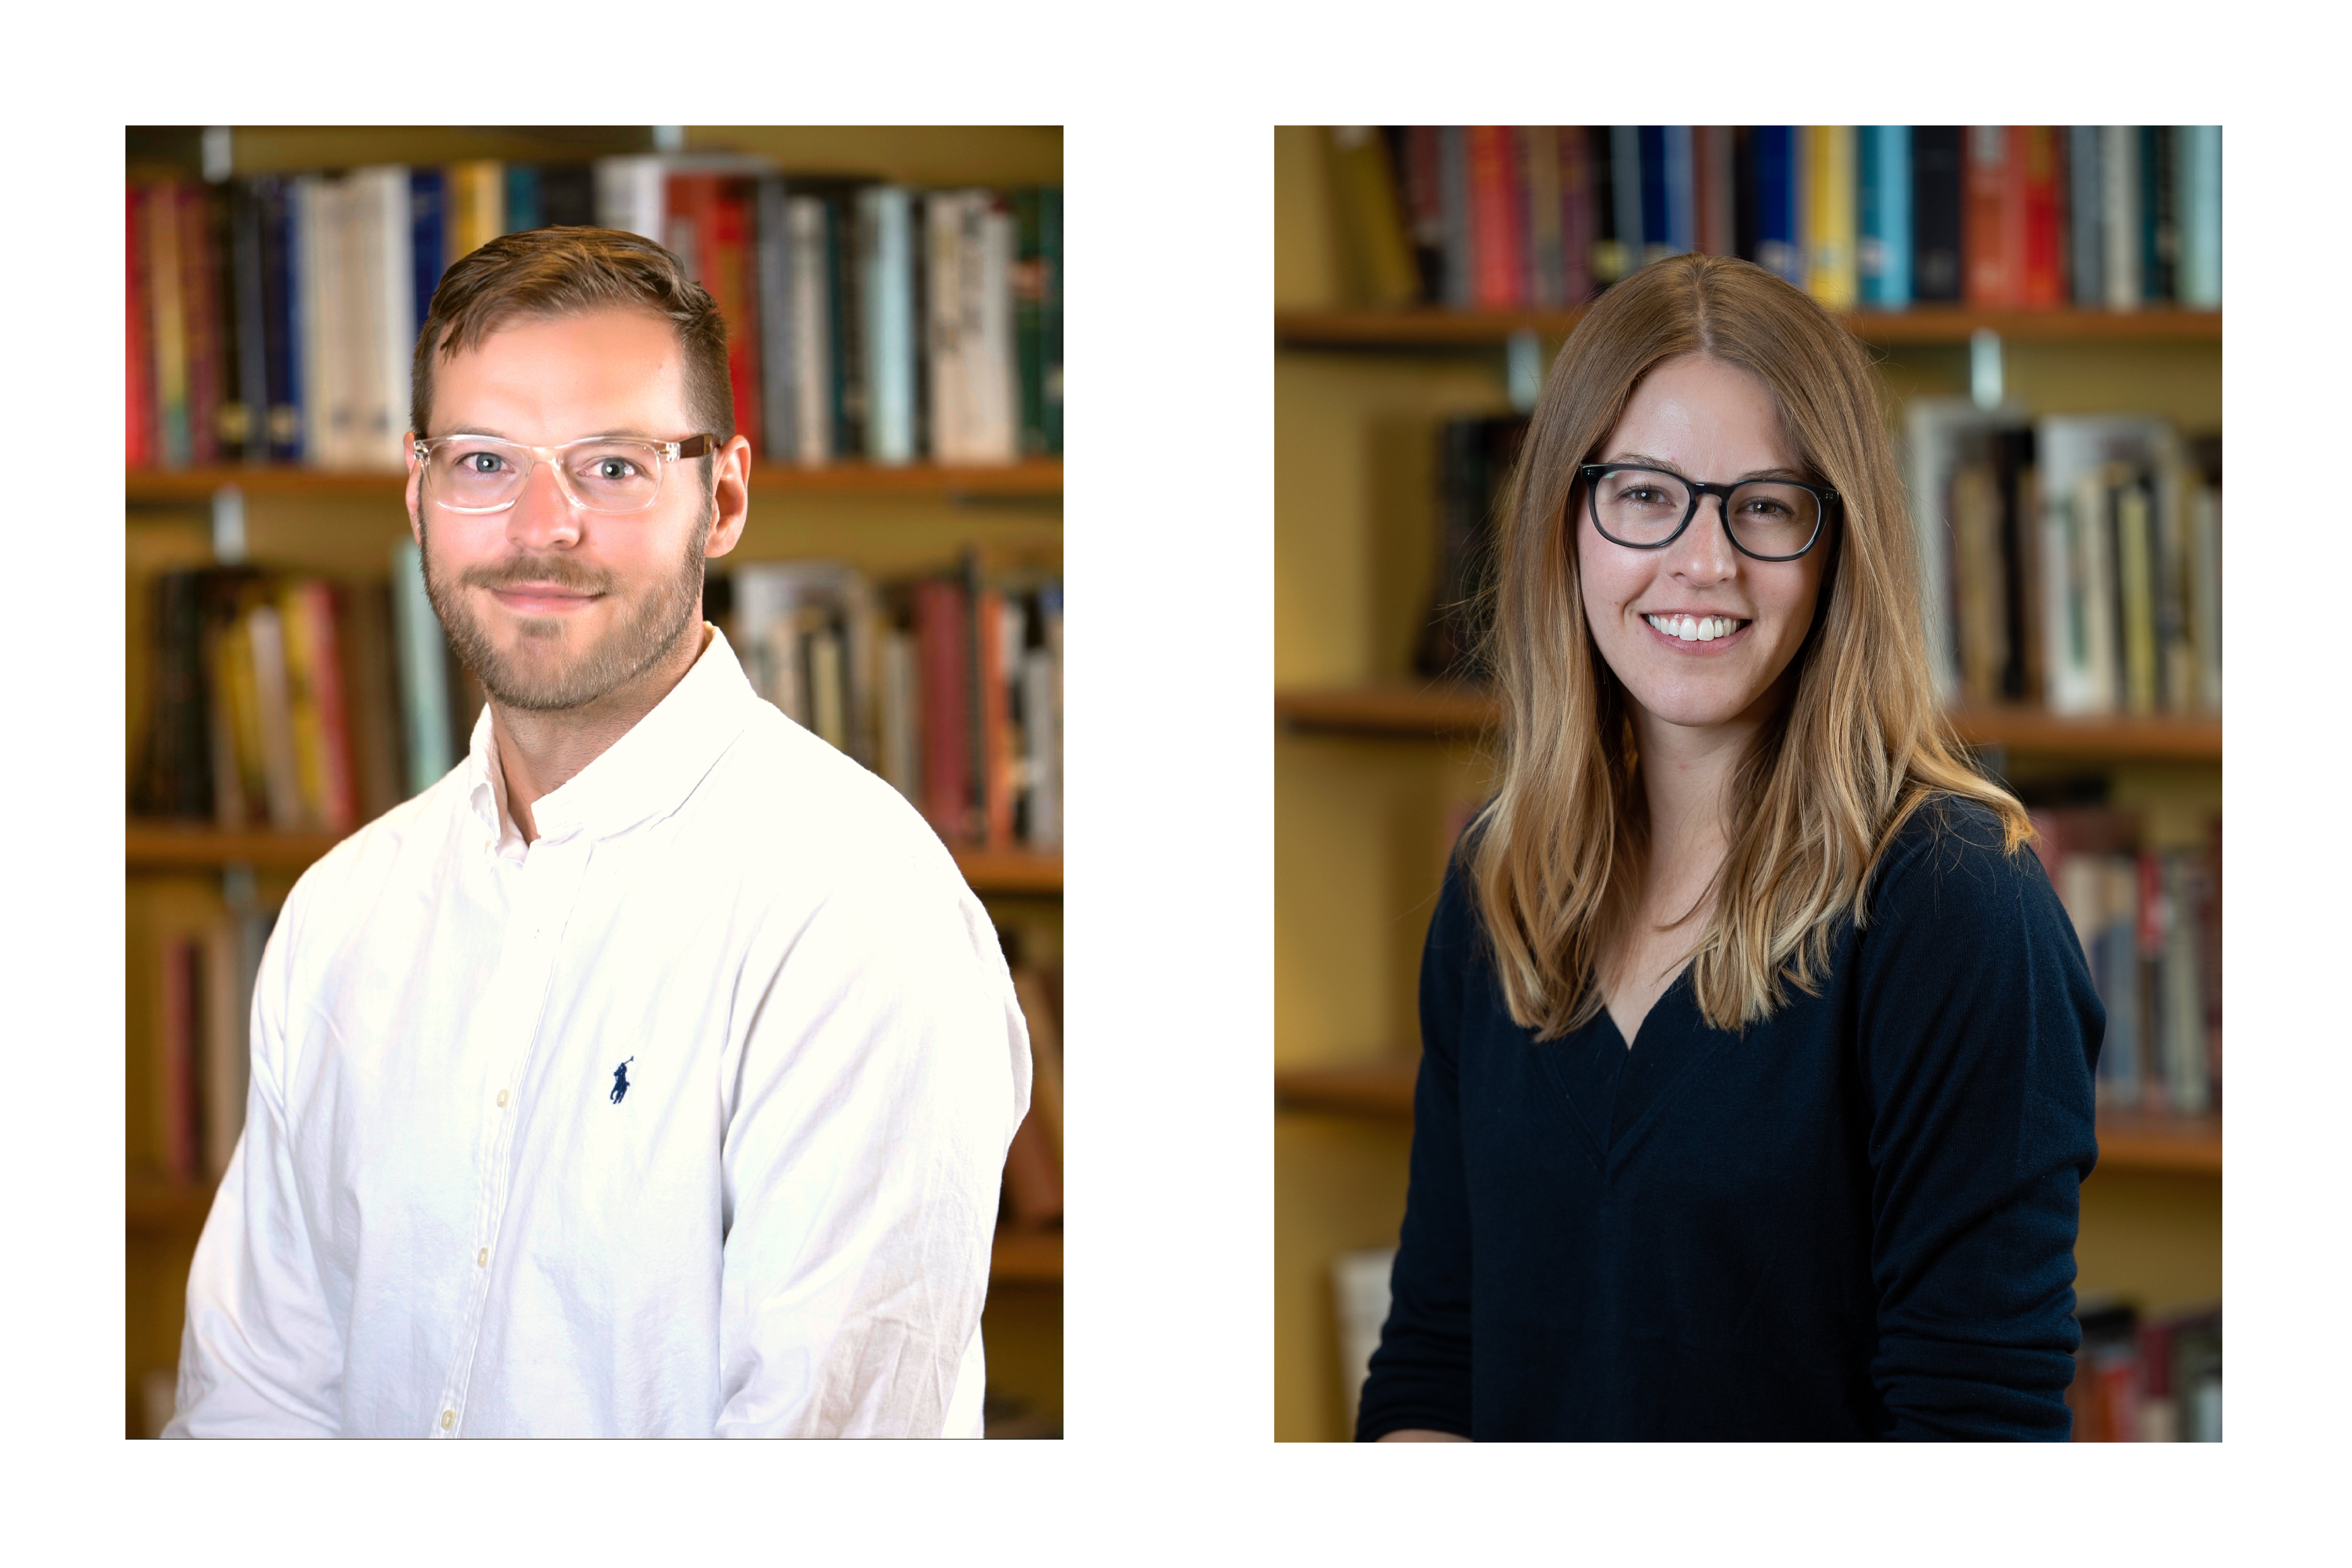 PhD students CP Moreau and Laura McCann, awarded fall 2018.